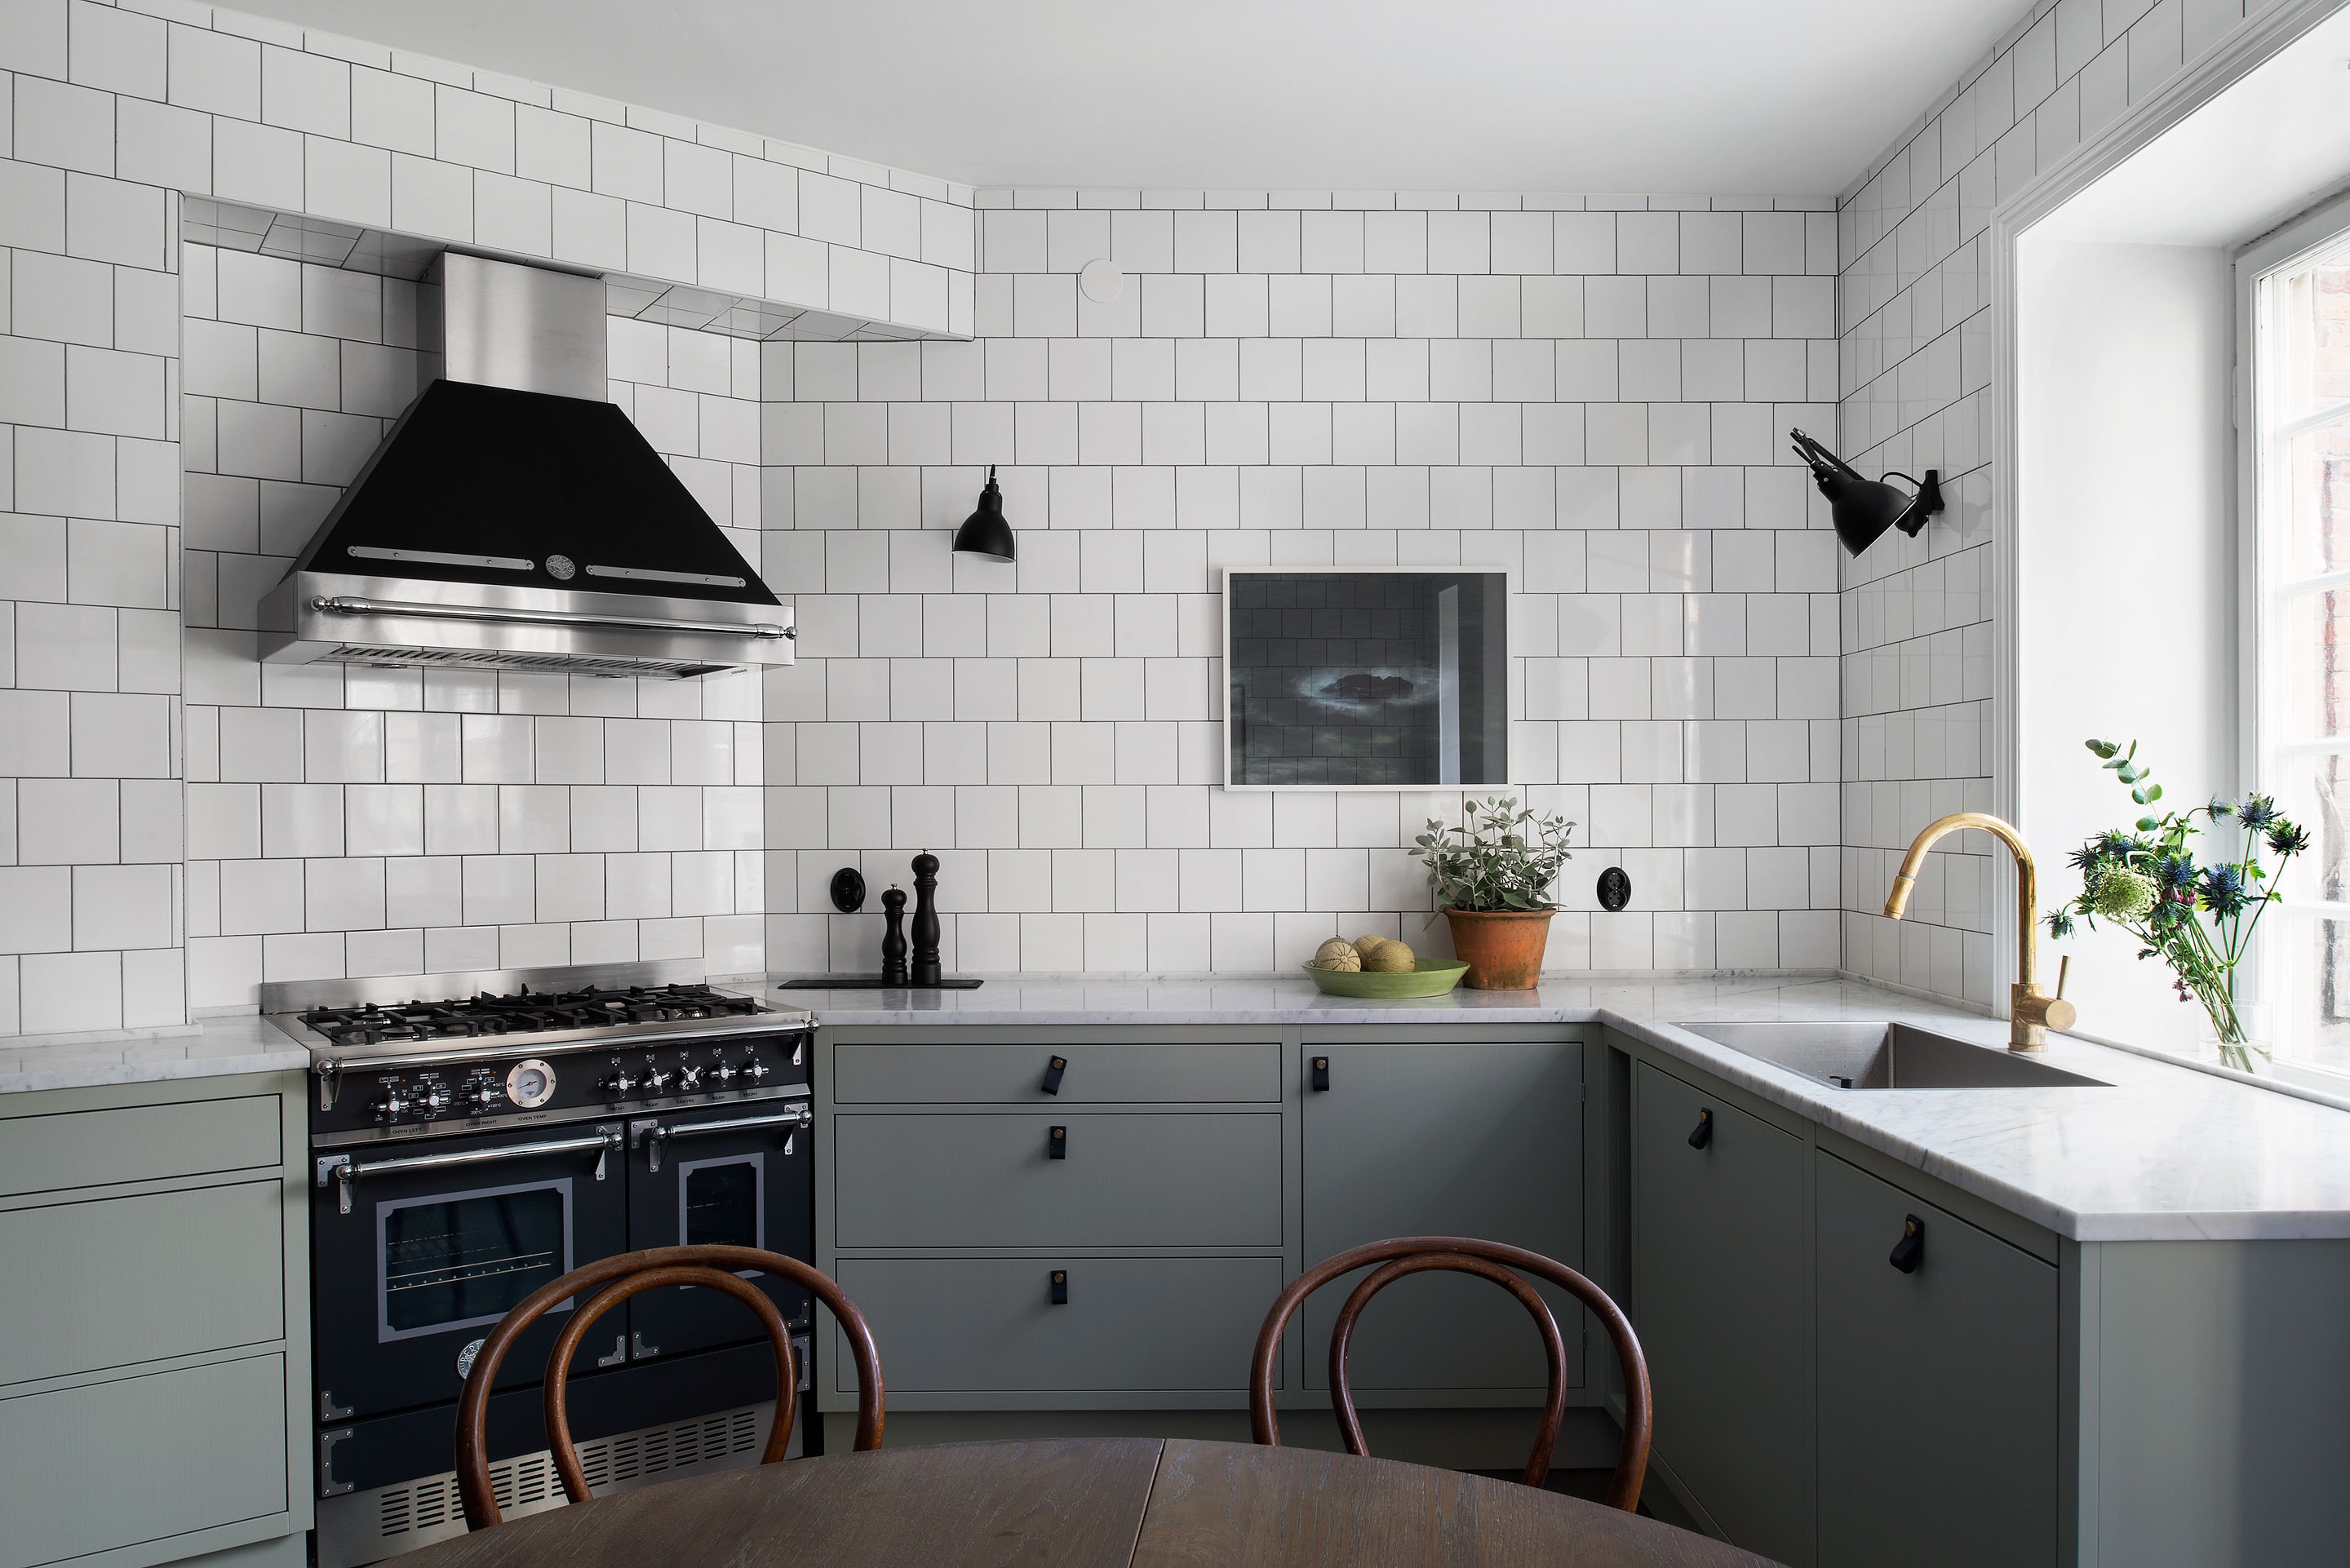 Green kitchen with white tiles - COCO LAPINE DESIGNCOCO LAPINE DESIGN